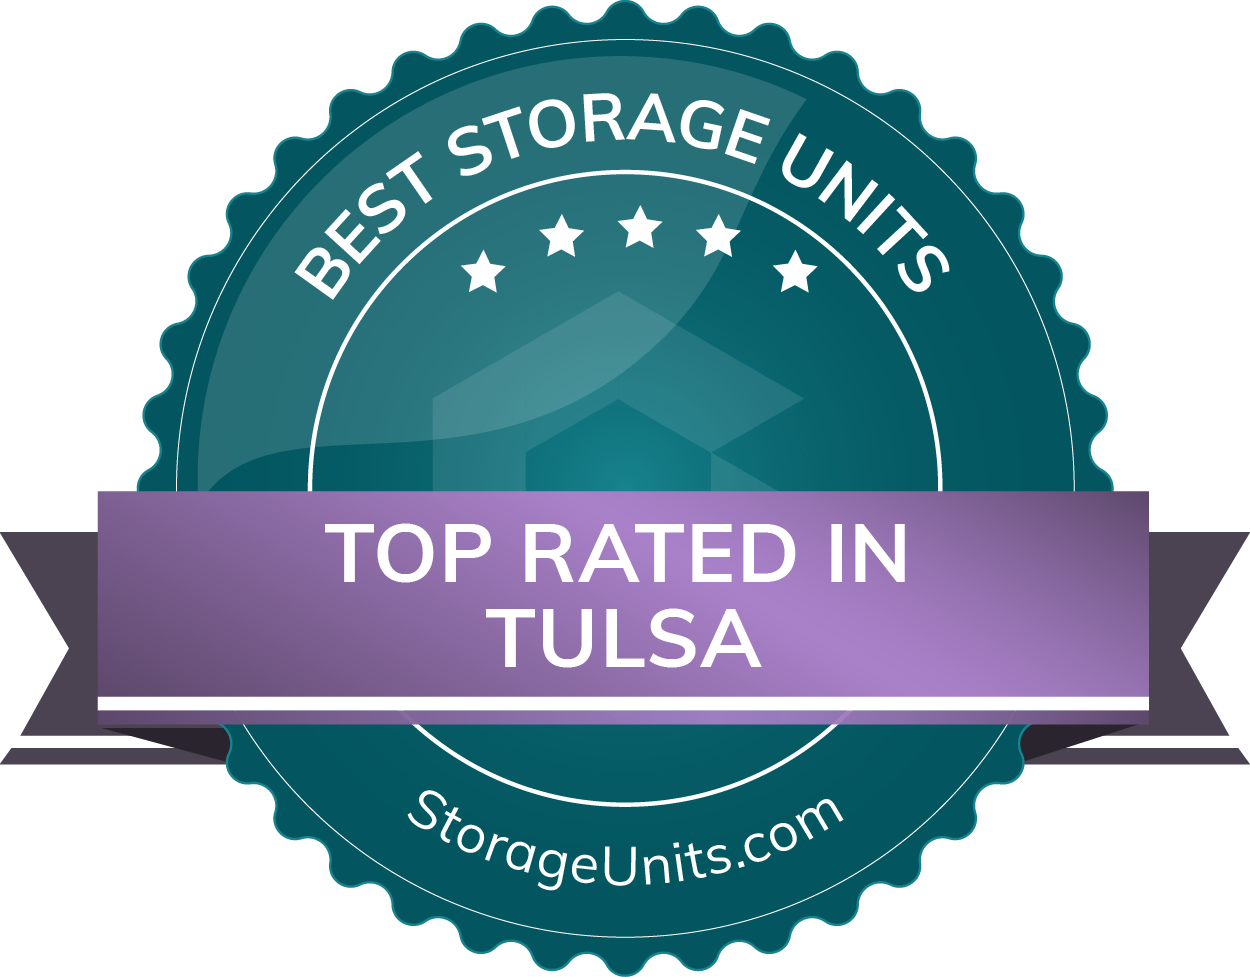 Best Self Storage Units in Tulsa, Oklahoma of 2022